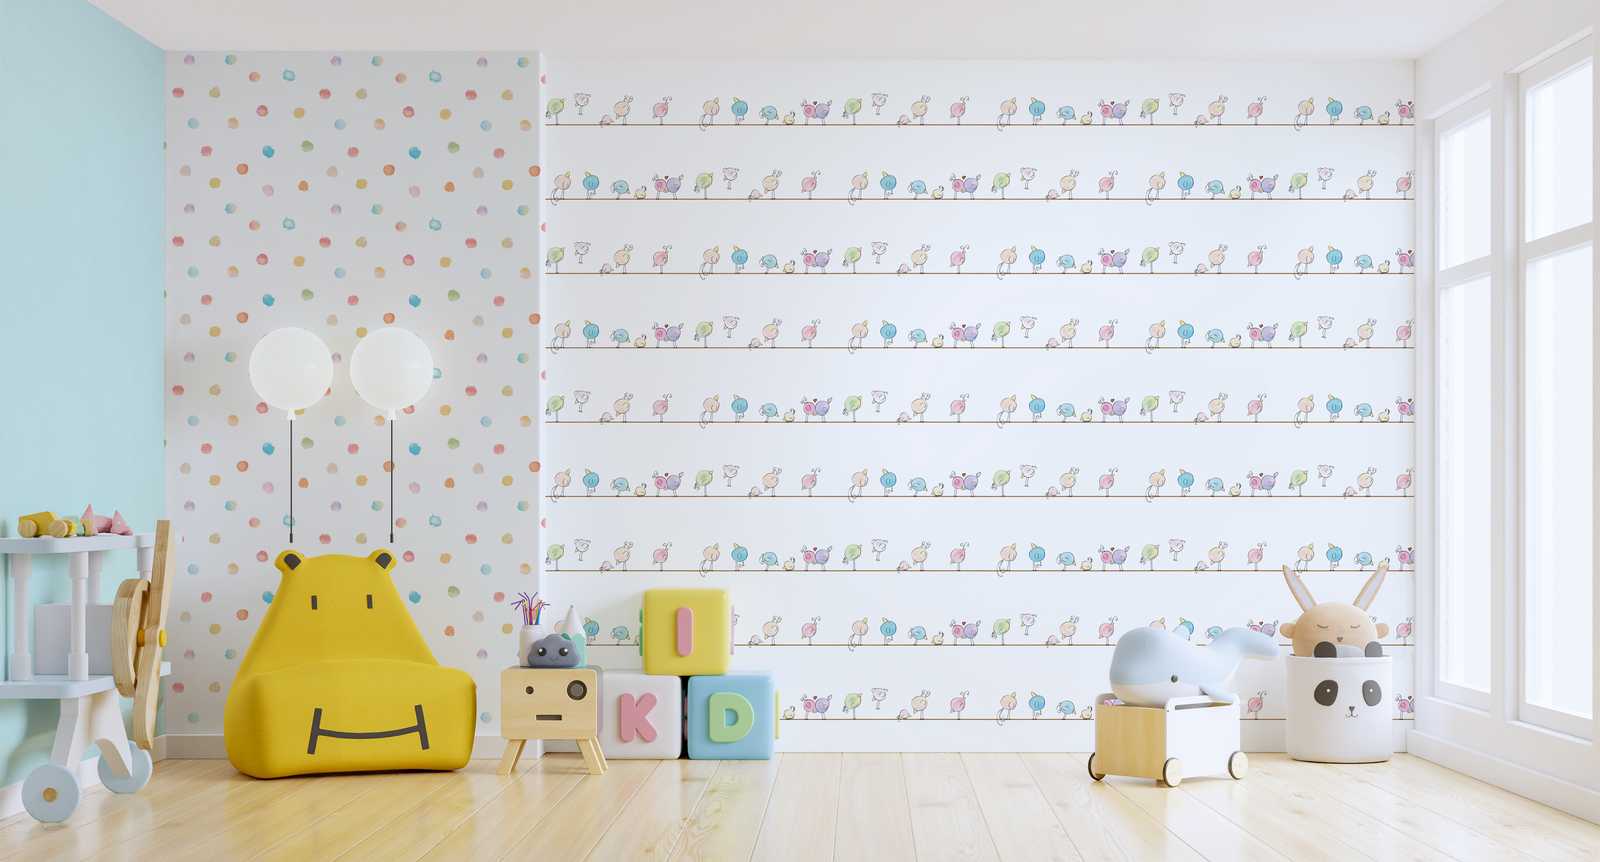             Kinderzimmer Tapete Aquarell & Vögel – Bunt, Weiß, Blau
        